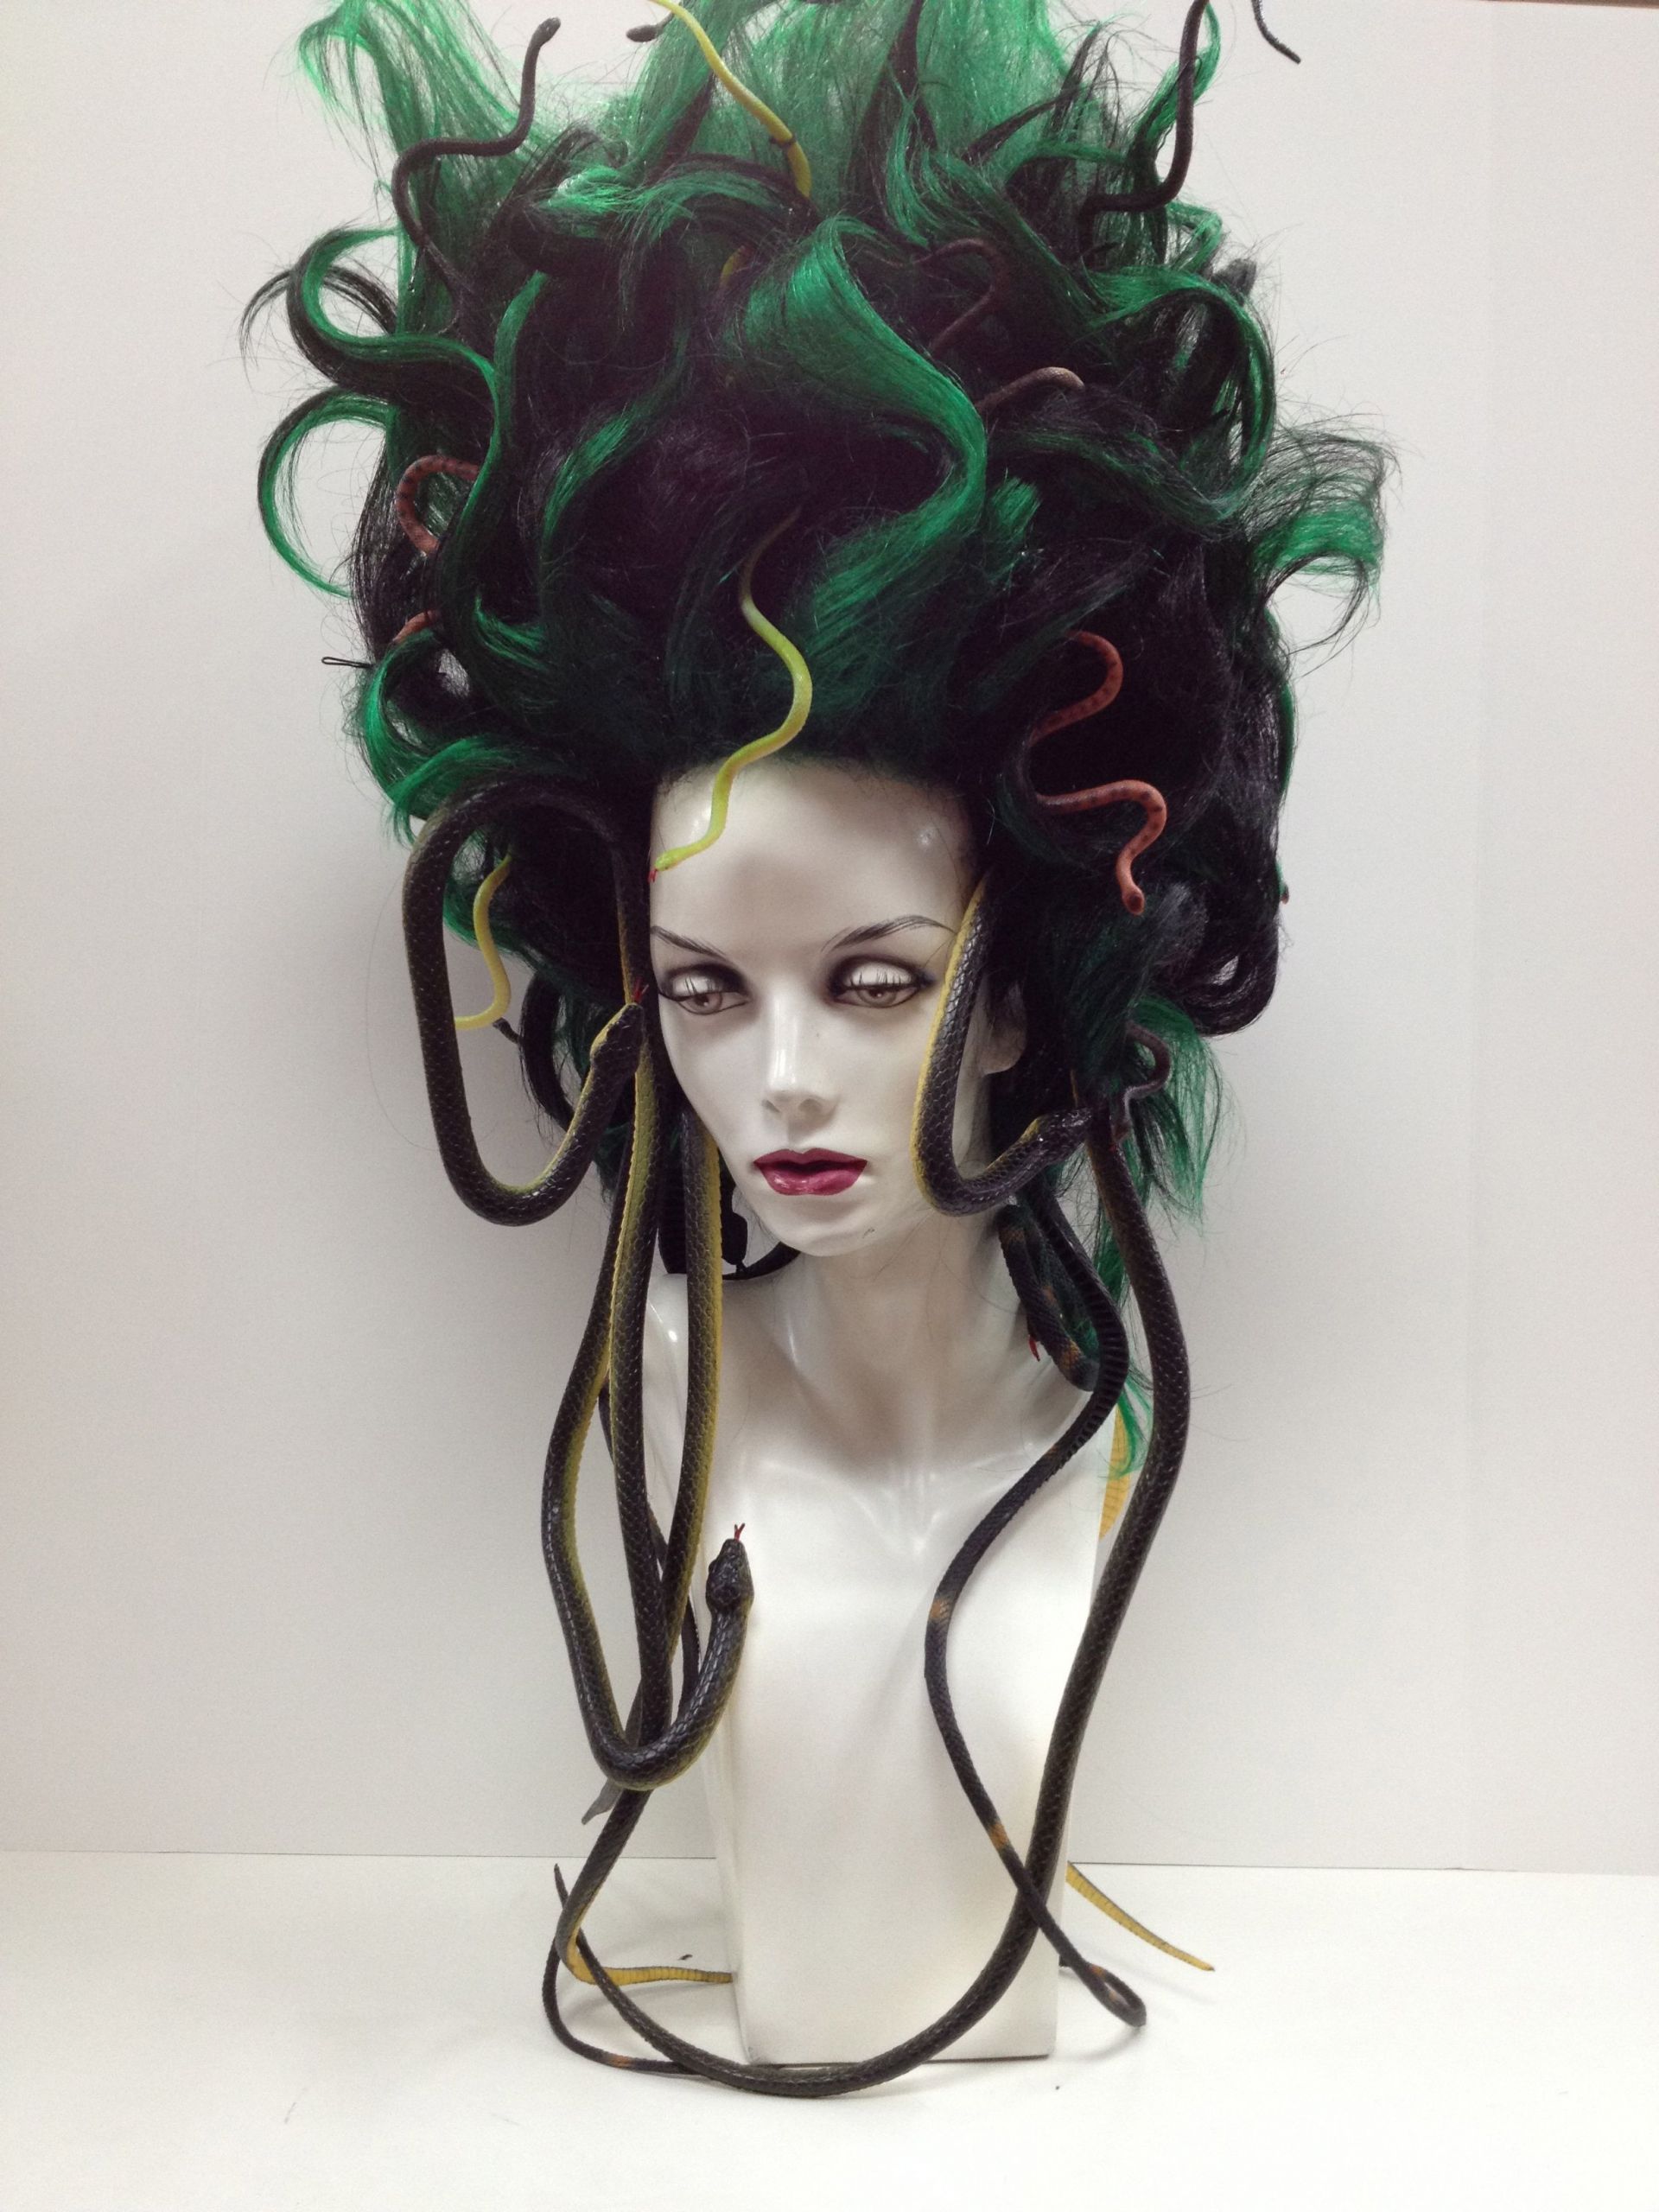 Medusa Costume DIY
 Pin on crafts